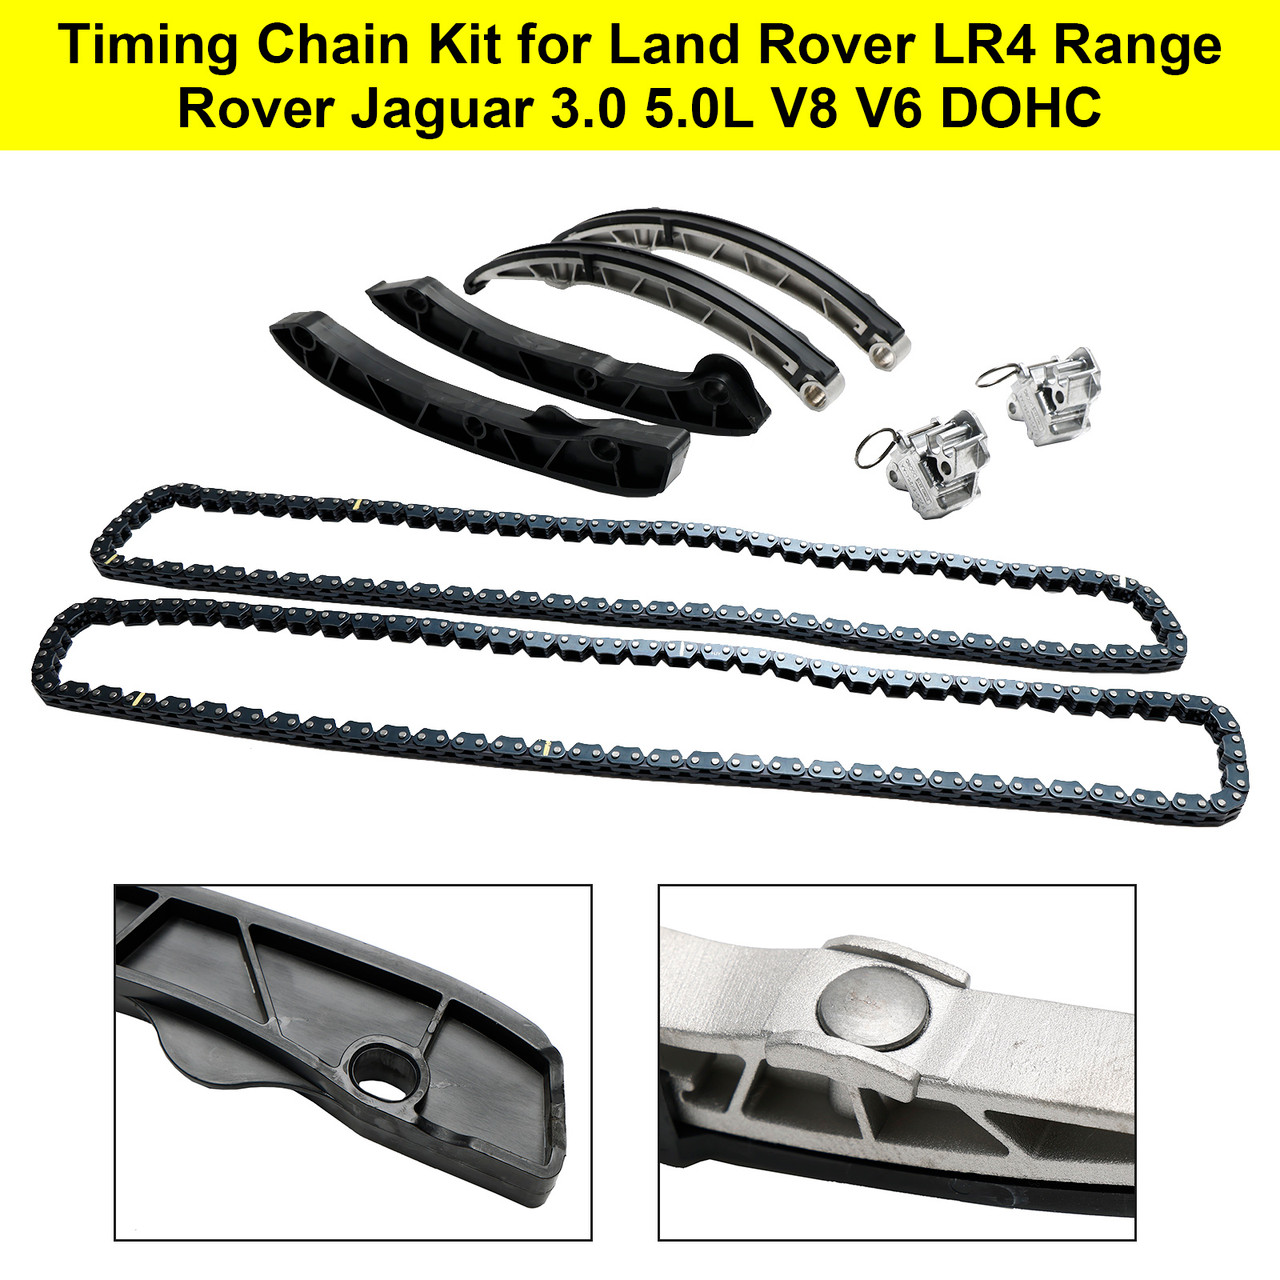 Timing Chain Kit for Land Rover LR4 Range Rover Jaguar 3.0 5.0L V8 V6 DOHC